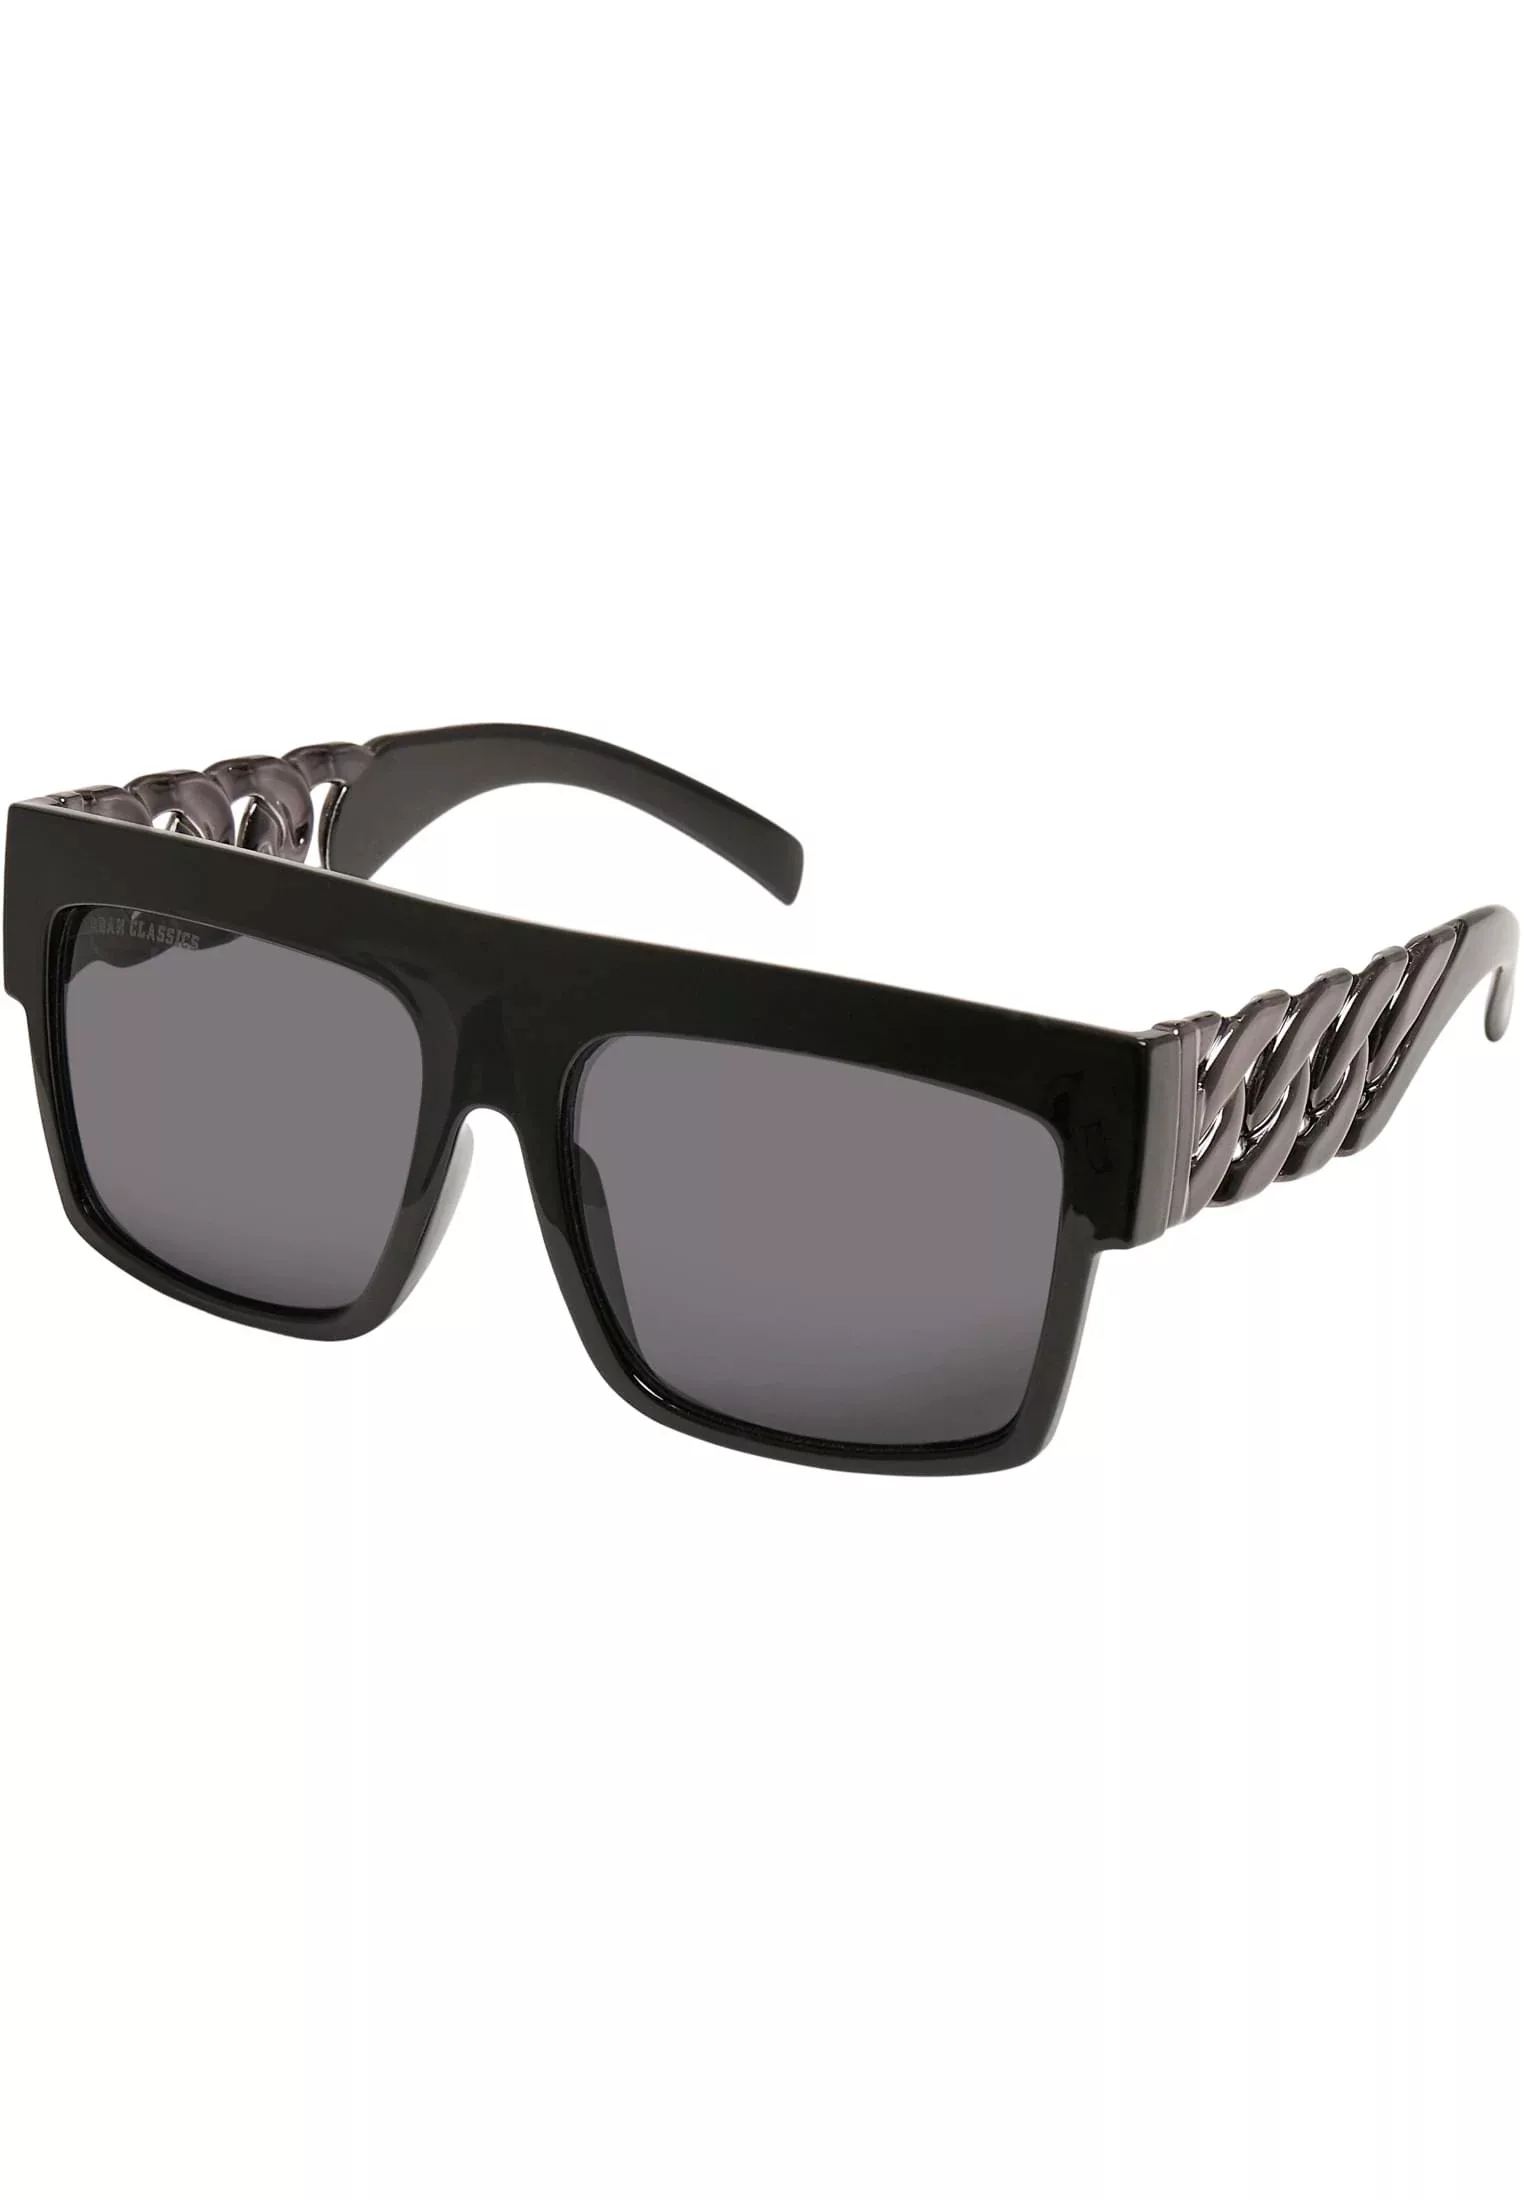 URBAN CLASSICS Sonnenbrille "Accessoires Sunglasses Zakynthos with Chain" günstig online kaufen